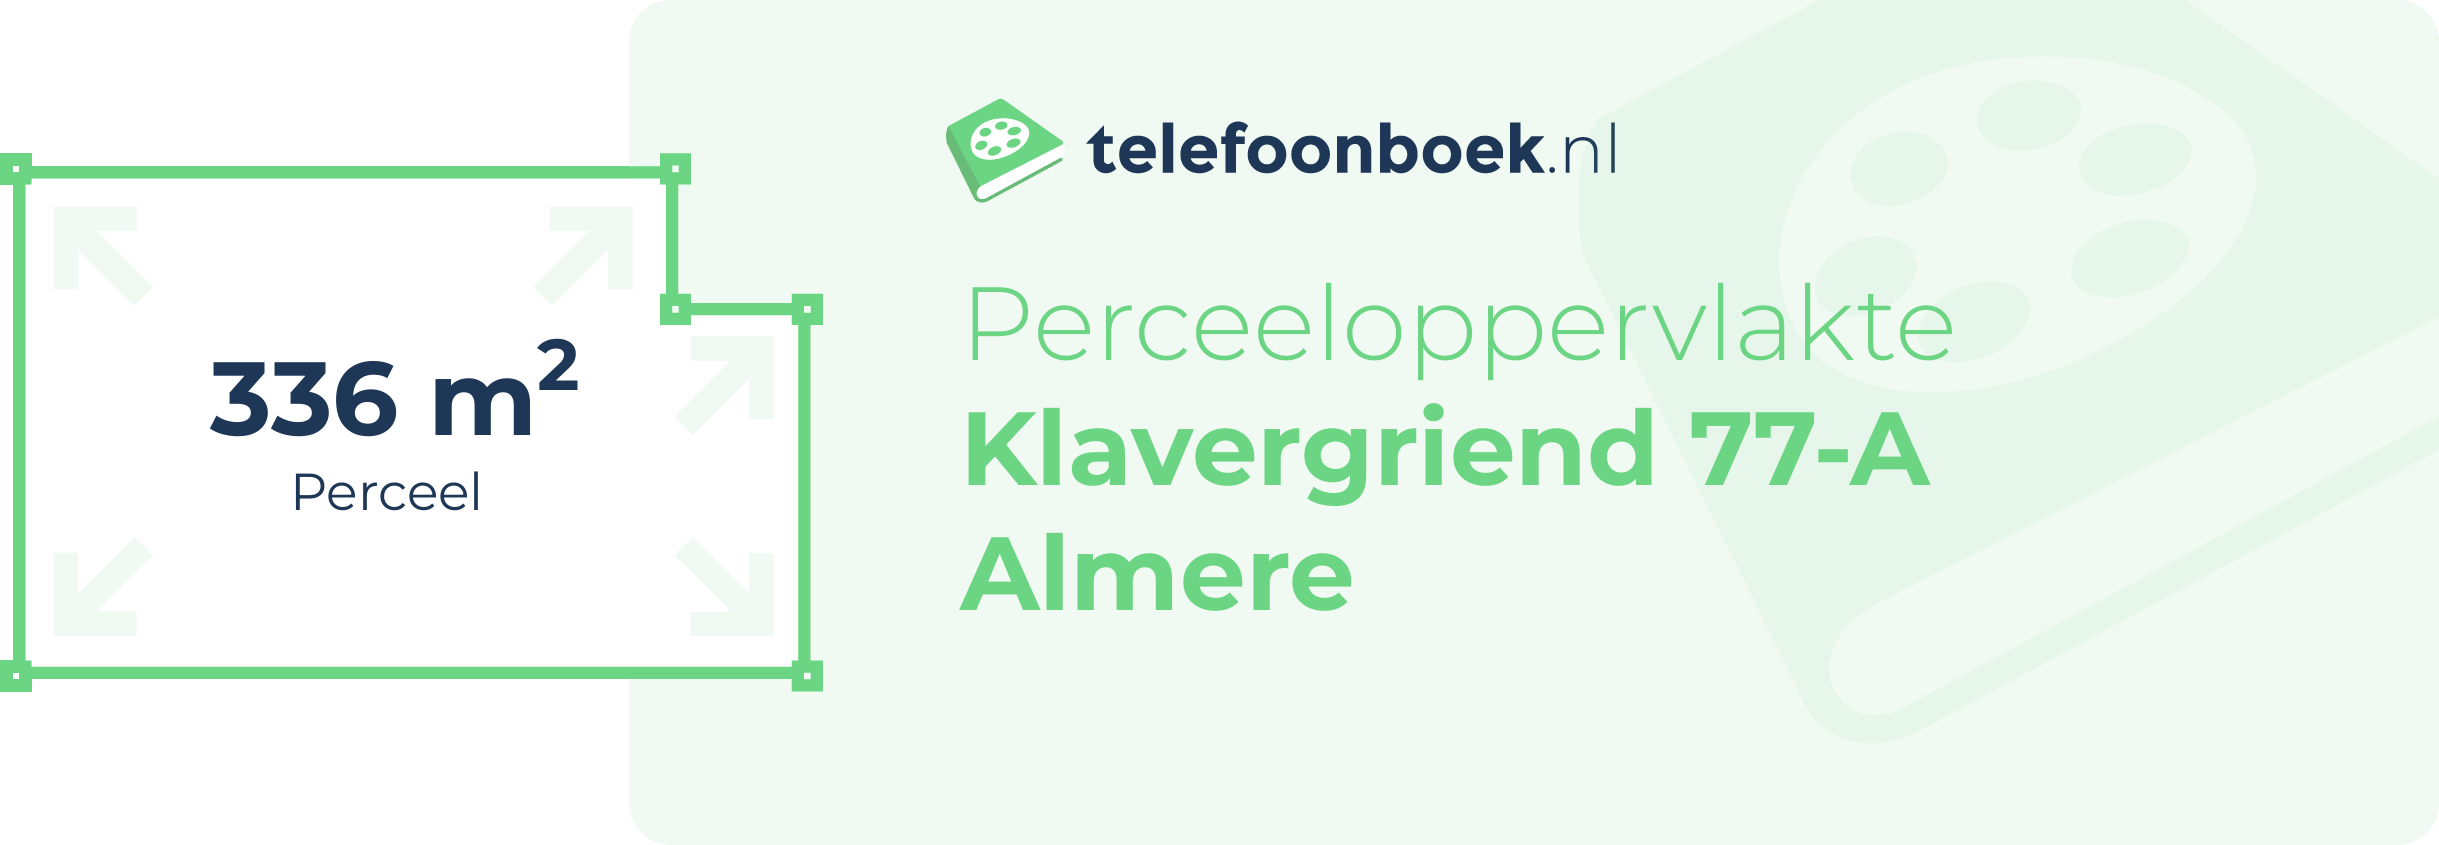 Perceeloppervlakte Klavergriend 77-A Almere